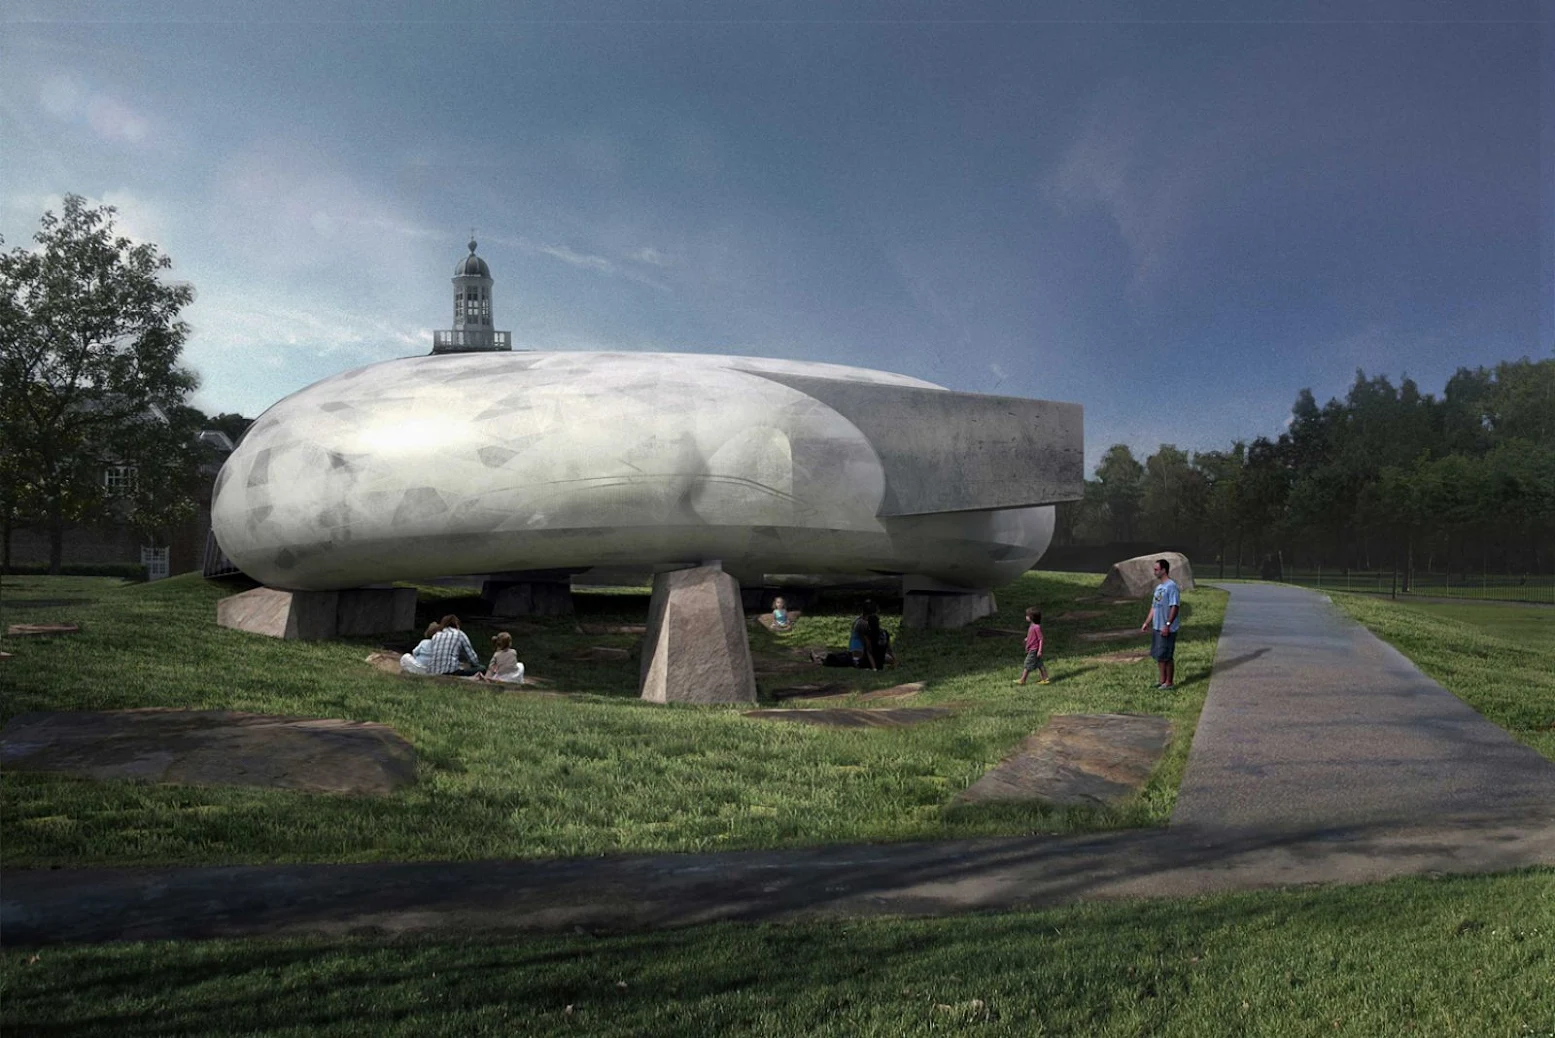 Smiljan Radic to design 2014 Serpentine pavilion